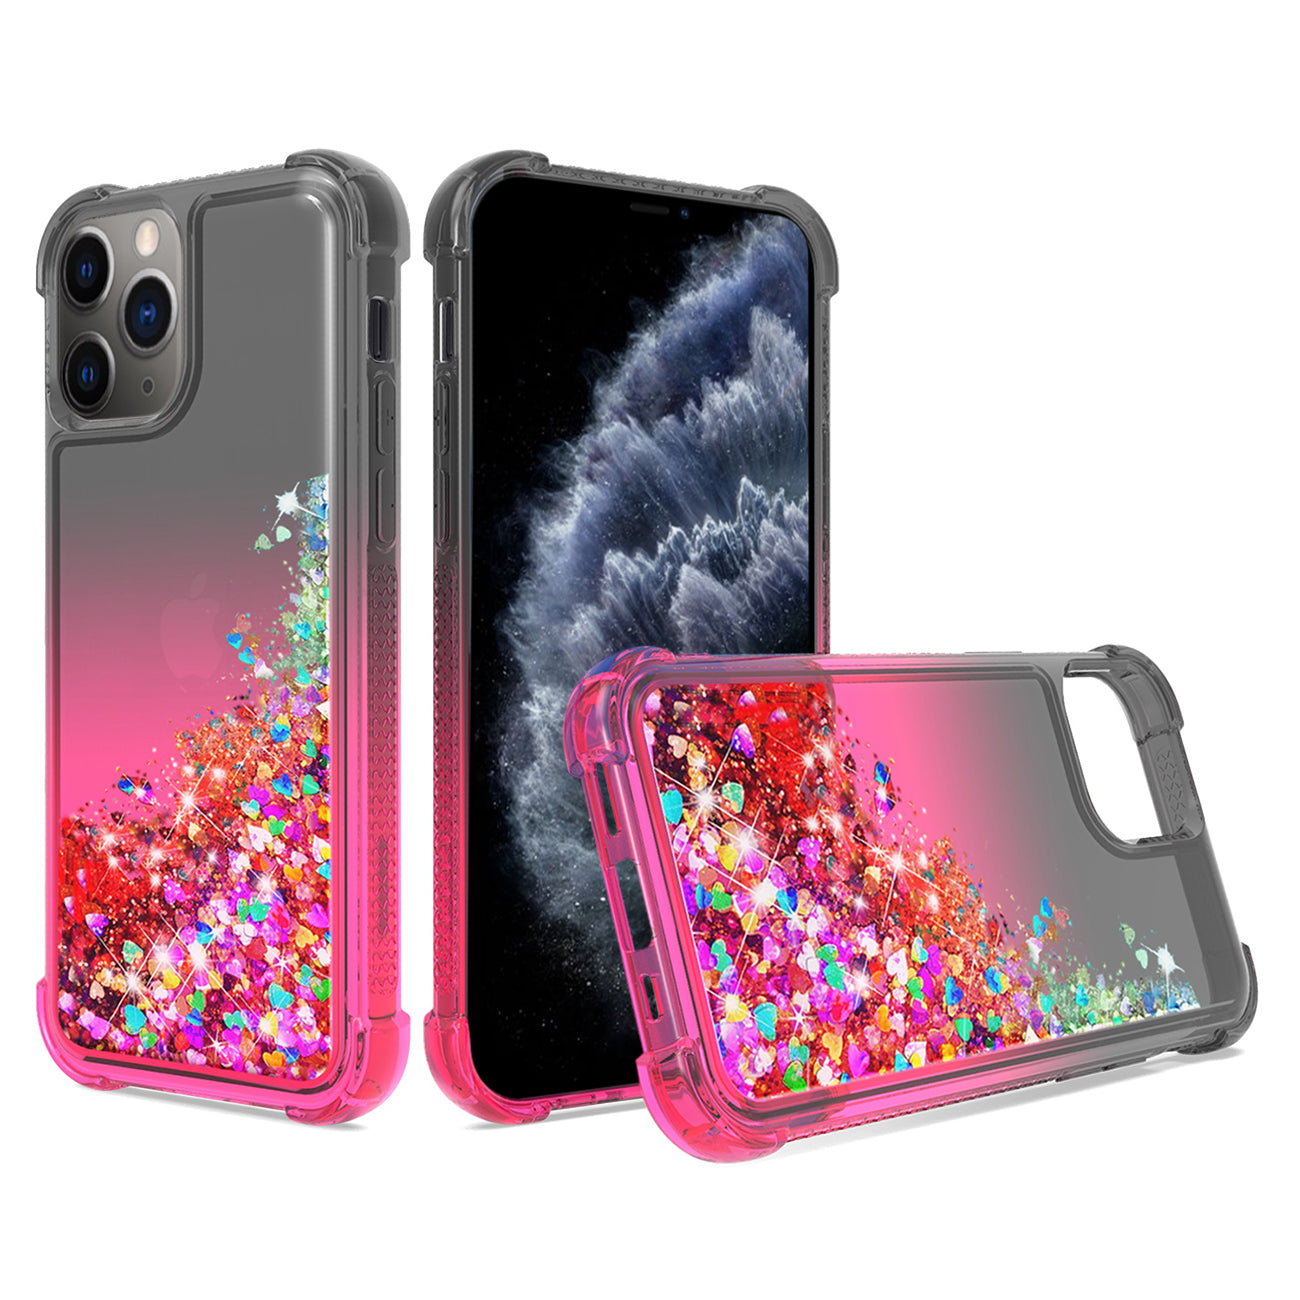 Case Bumper Shiny Flowing Glitter Liquid Apple iPhone 11 Pro Max Black Color